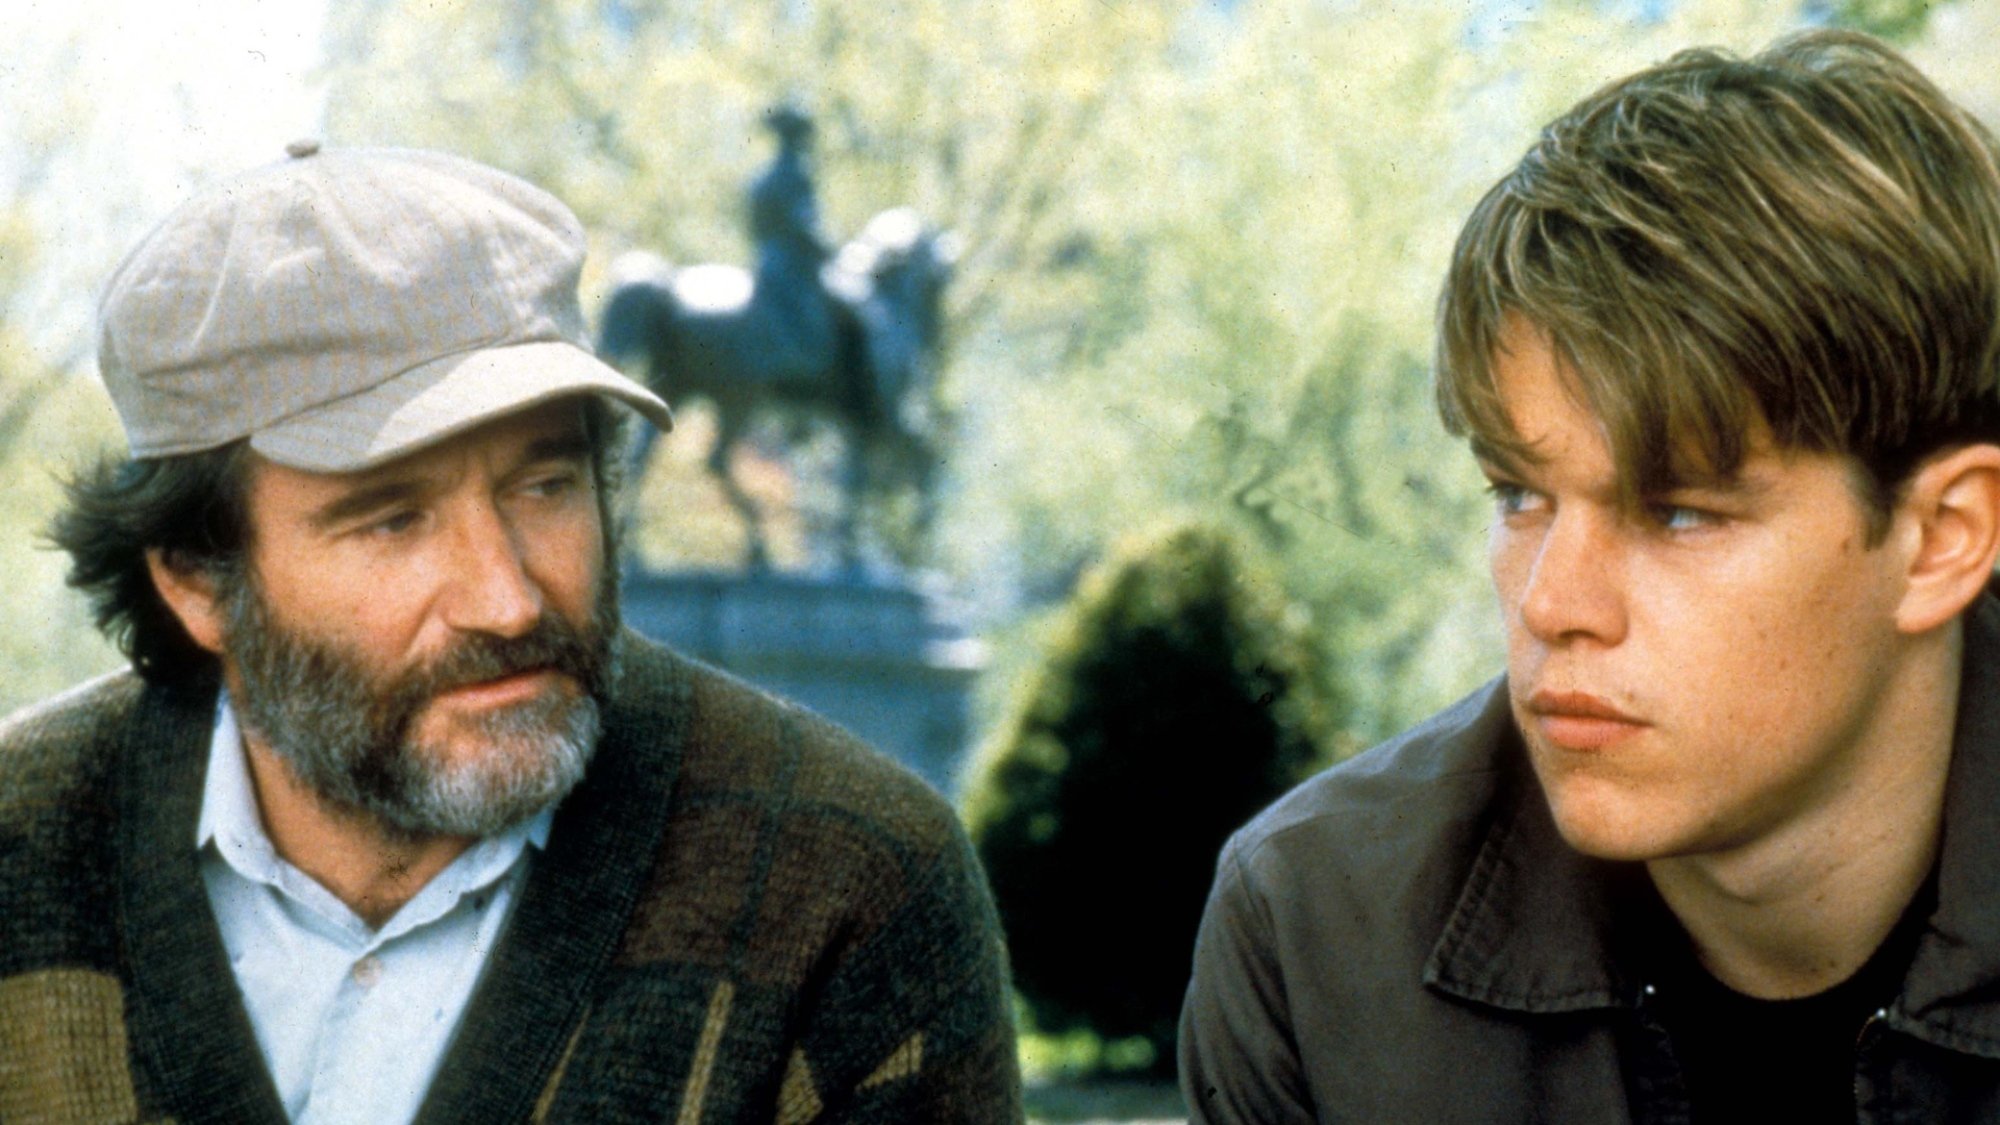 Robin Willams and Matt Damon in "Good Will Hunting."